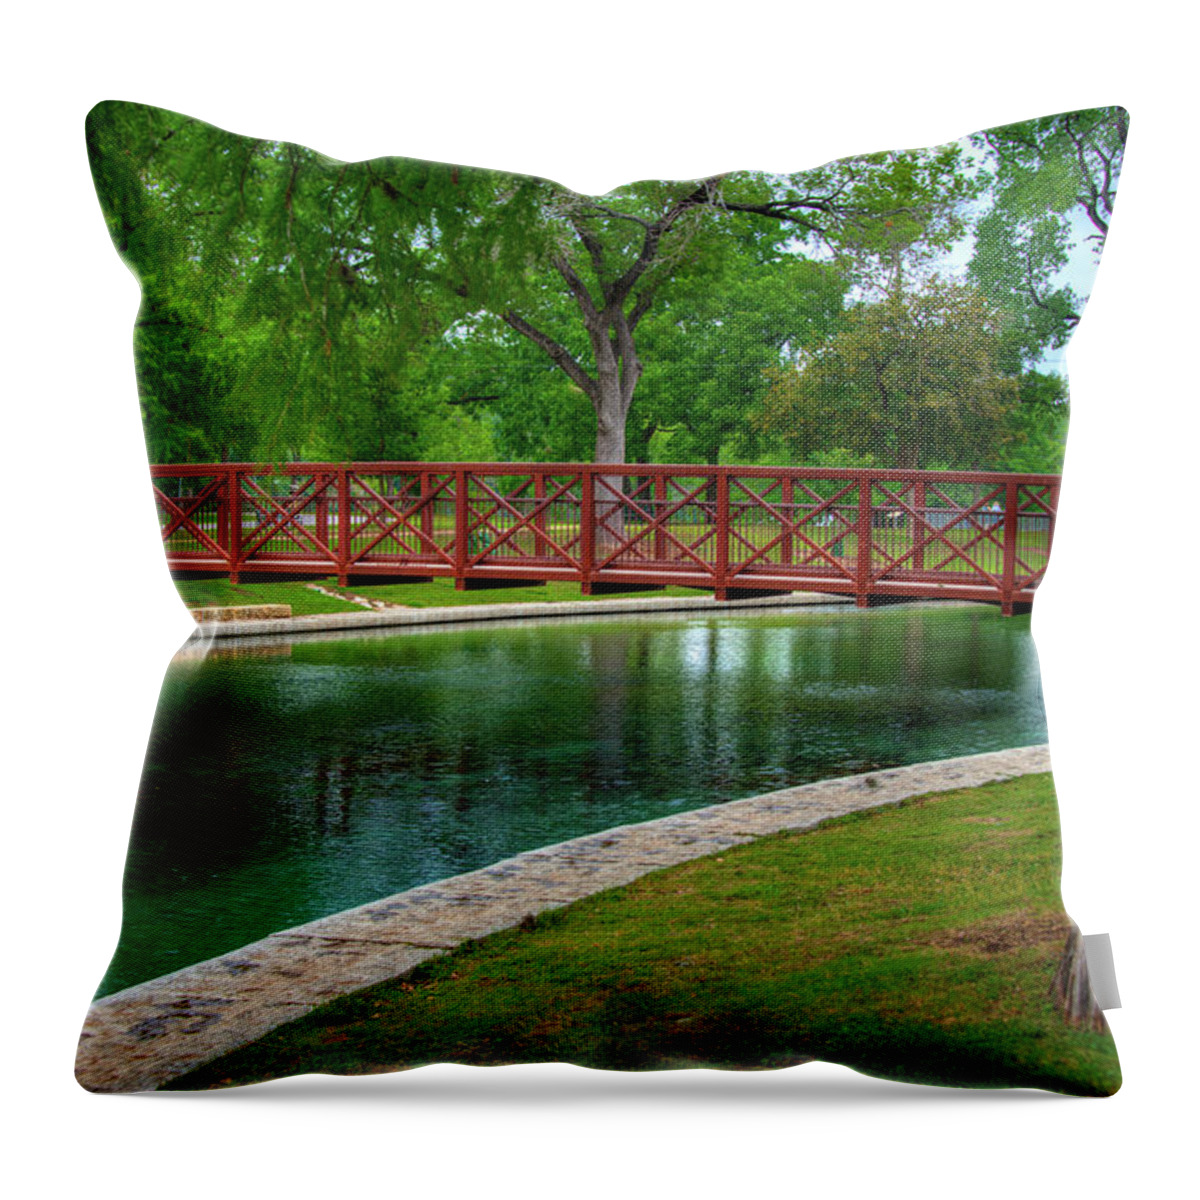 Landa Park Bridge Throw Pillow featuring the photograph Landa Park Bridge by Kelly Wade